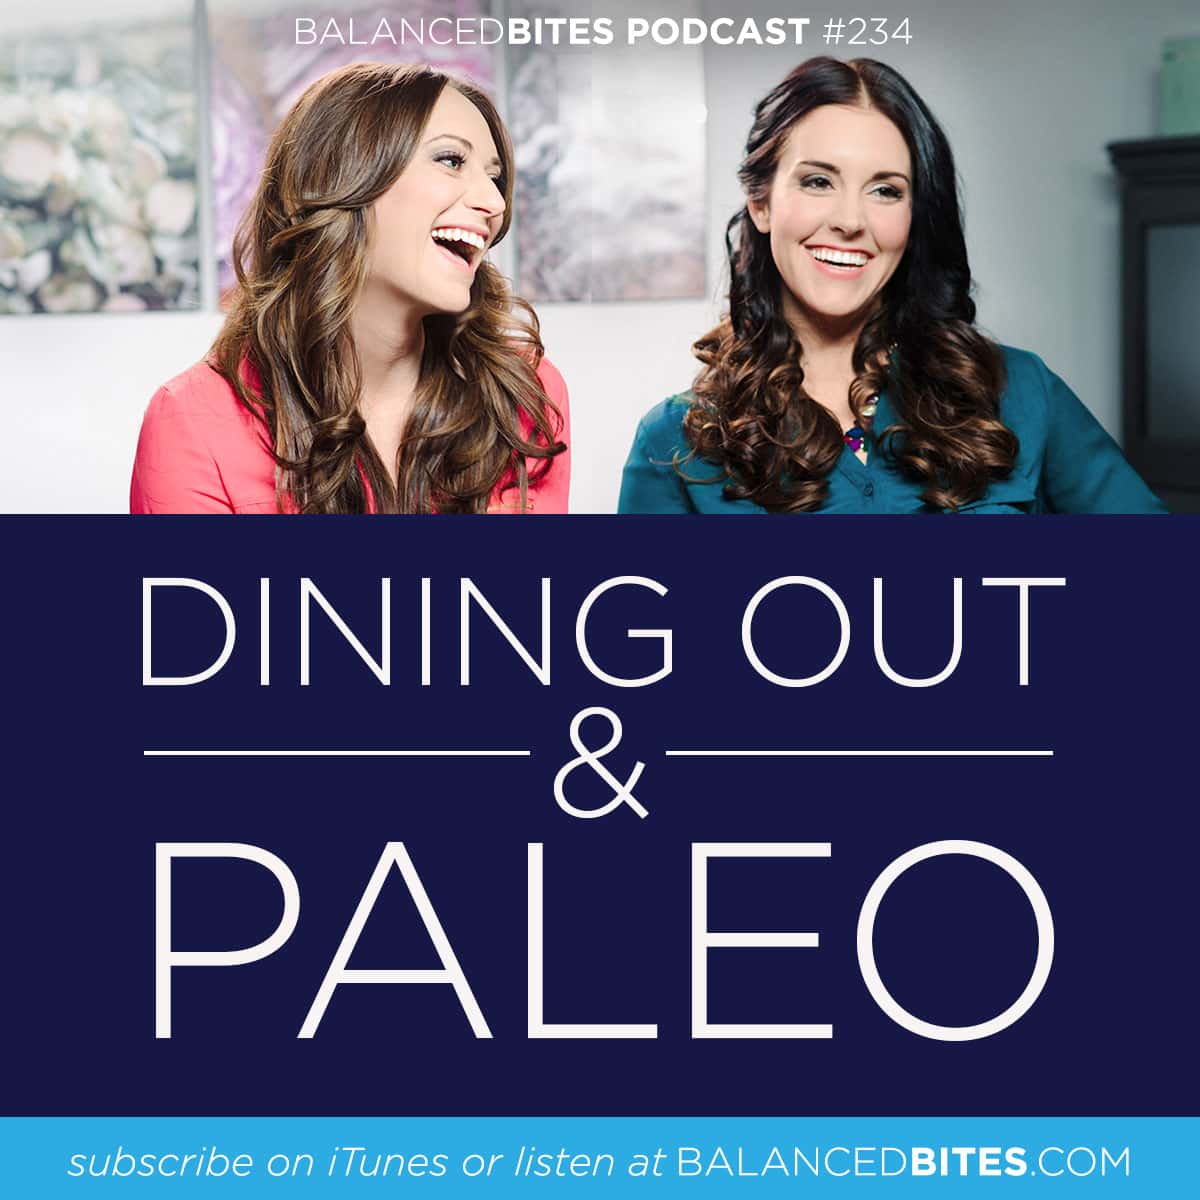 Dining Out and Paleo - Diane Sanfilippo, Liz Wolfe | Balanced Bites